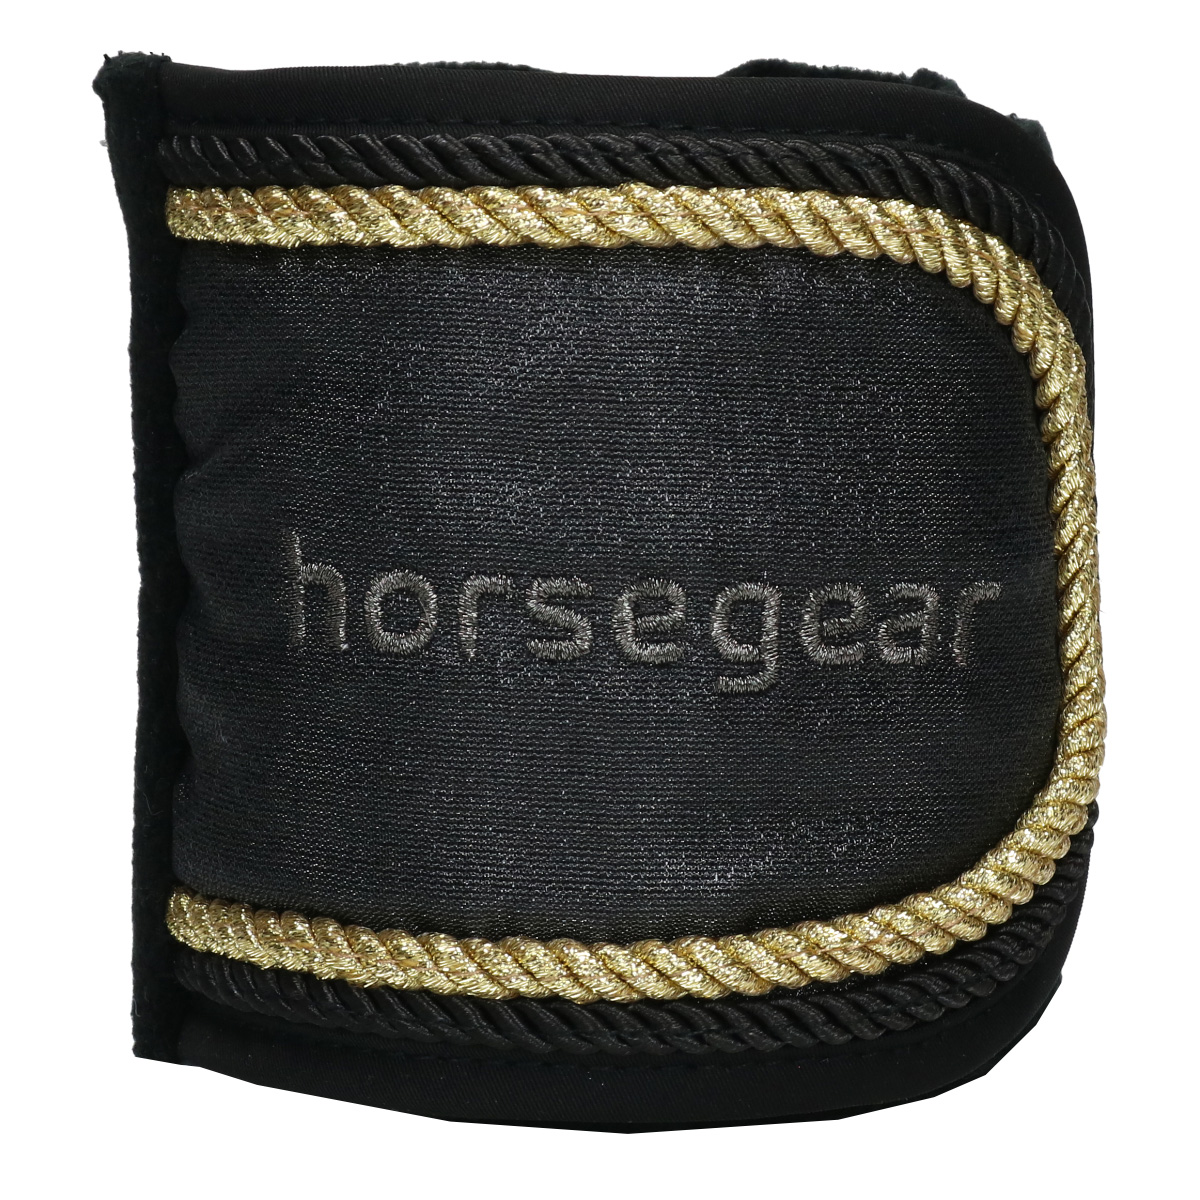 Bandages Horsegear Hgsparkle Zwart, PAARD in zwart